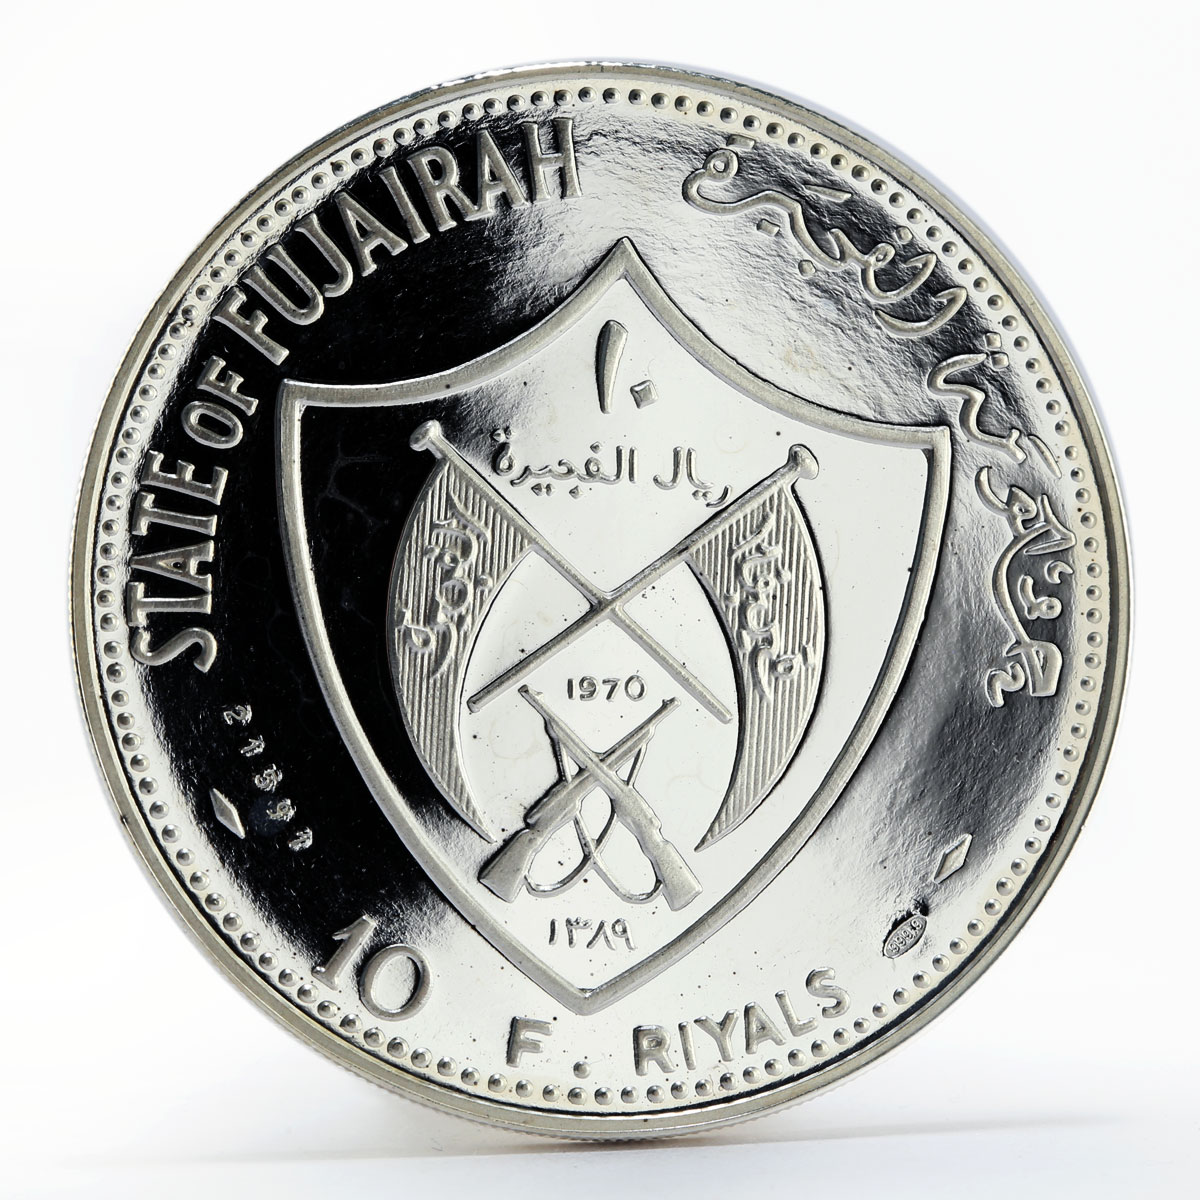 UAE Fujairah 10 riyals Pilgrim in the Philipines Coat of Arms proof silver 1970